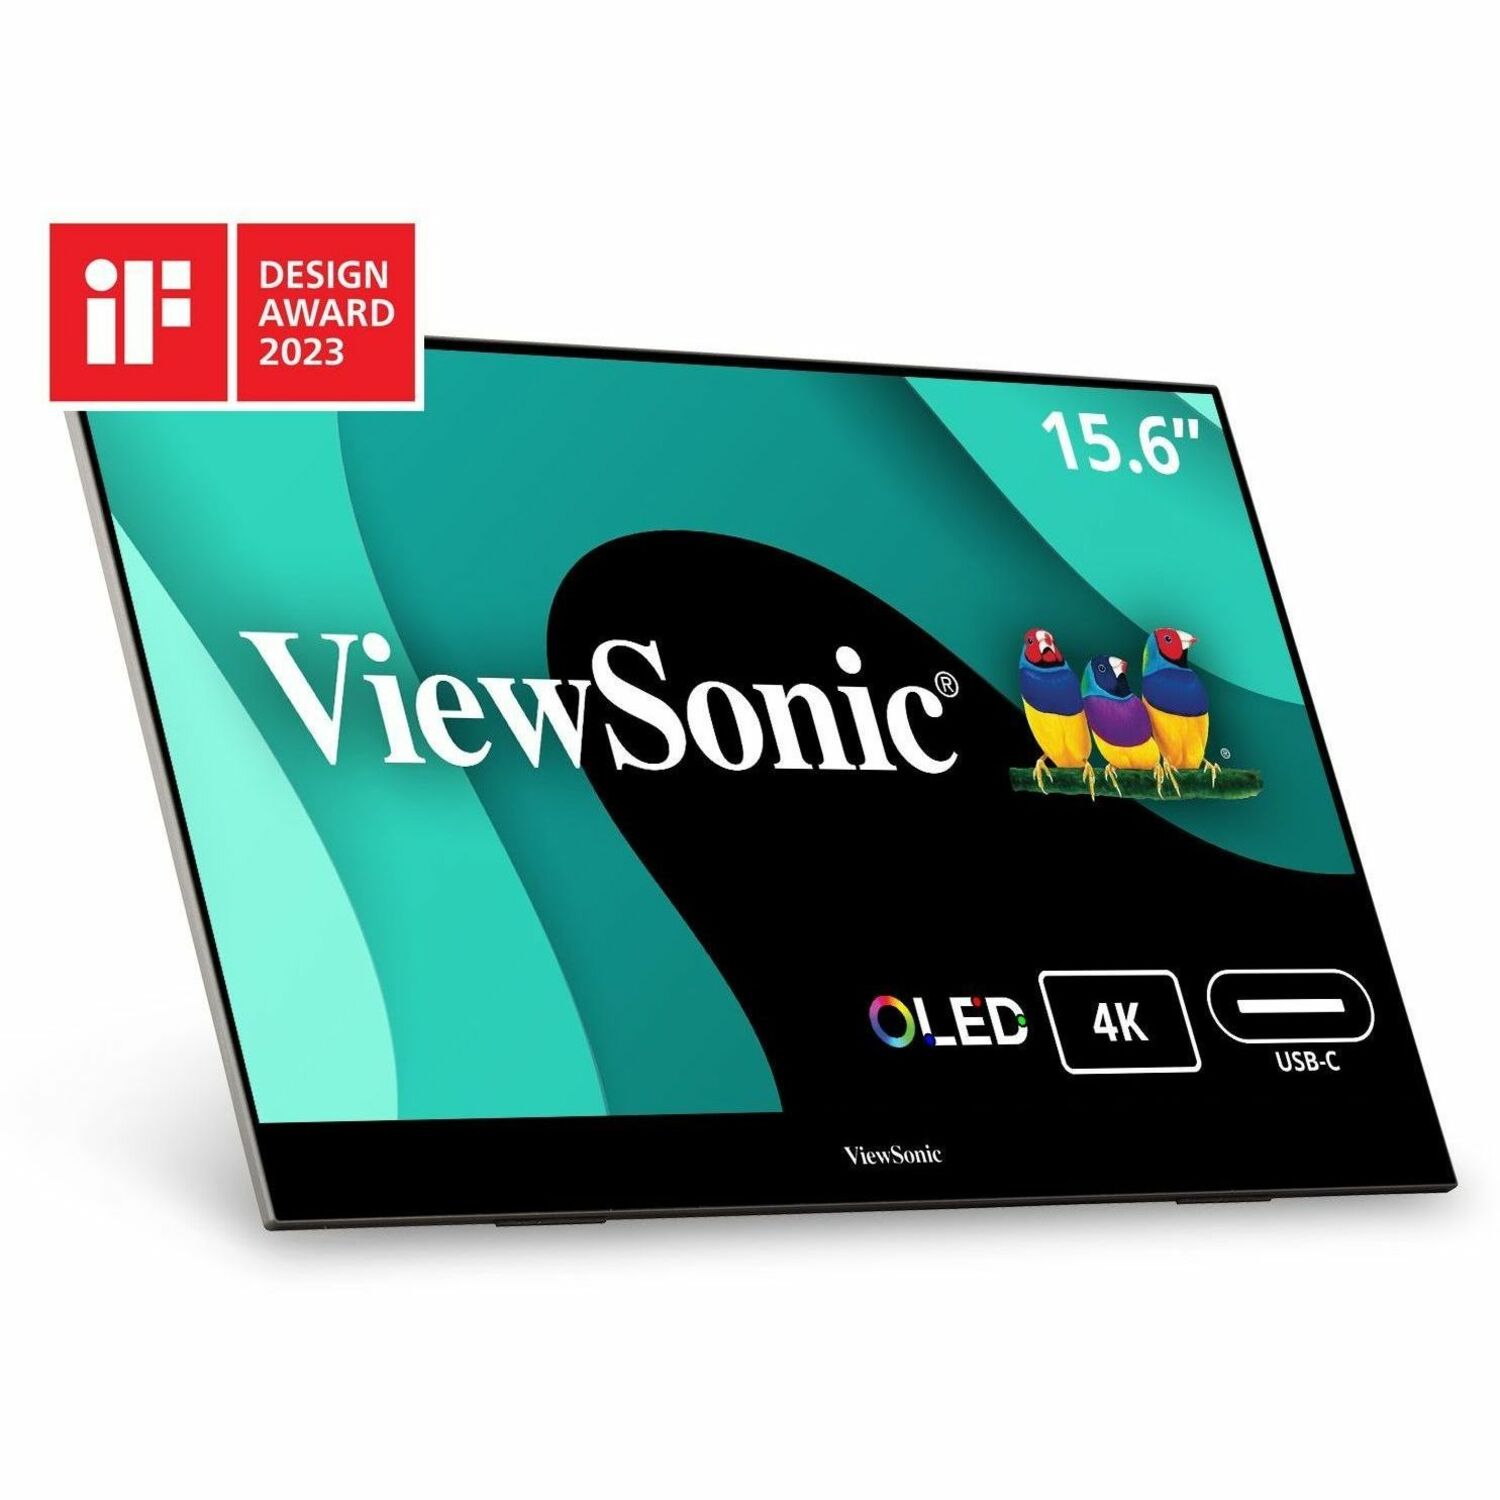 ViewSonic VX1655-4K-OLED - 15.6" 4K UHD OLED Portable Monitor w/ 60W USB-C, mini HDMI, 100% DCI-P3 - 400 cd/m²